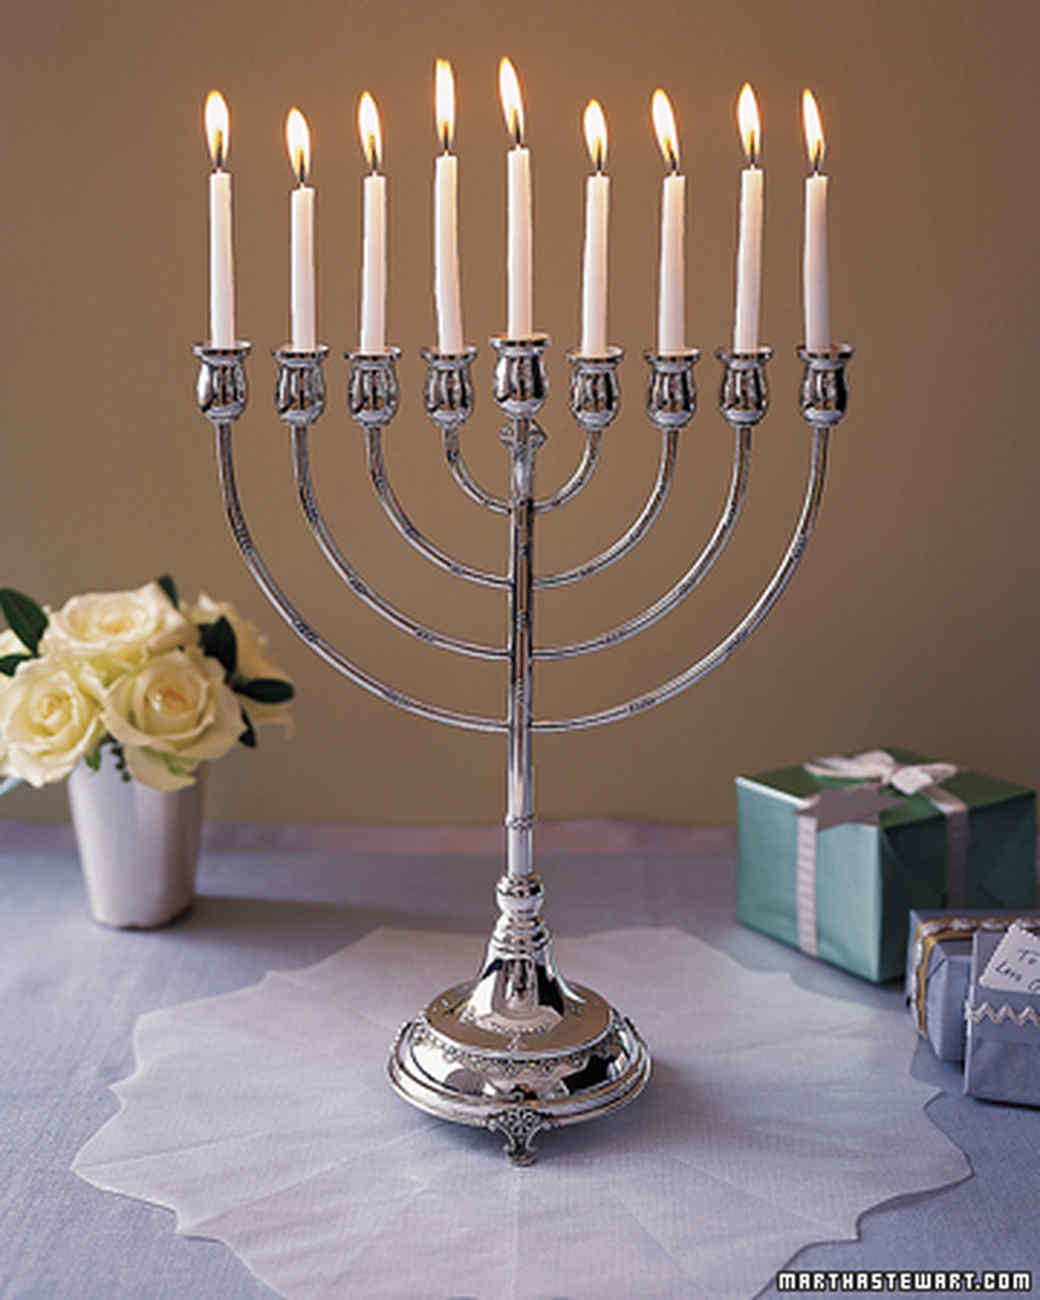 When Should You Light The Menorah? - OU Kosher Certification